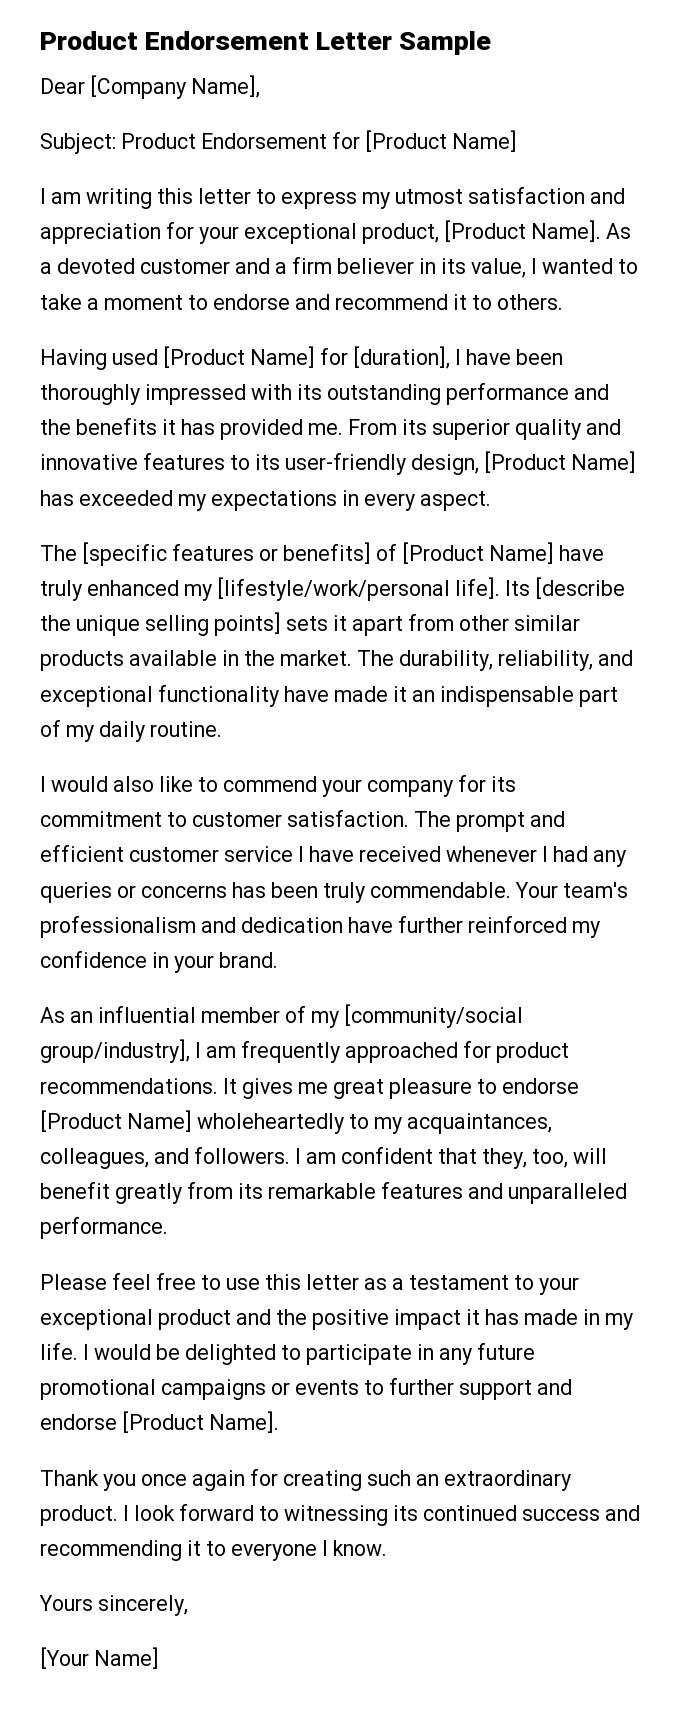 Product Endorsement Letter Sample